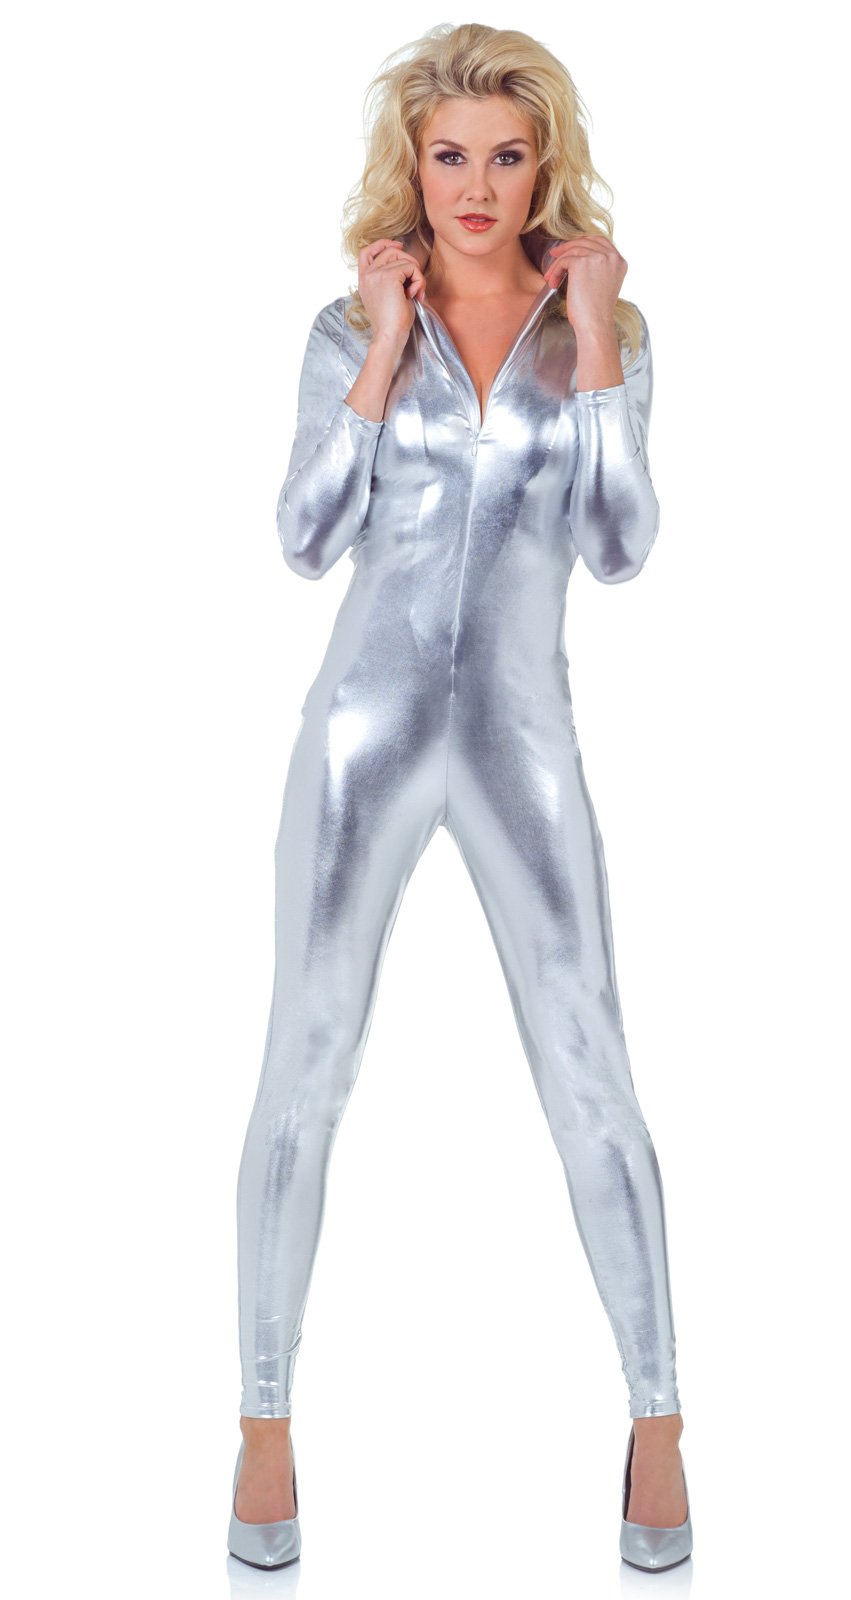 Silver Metallic Jumpsuit Adult Costume